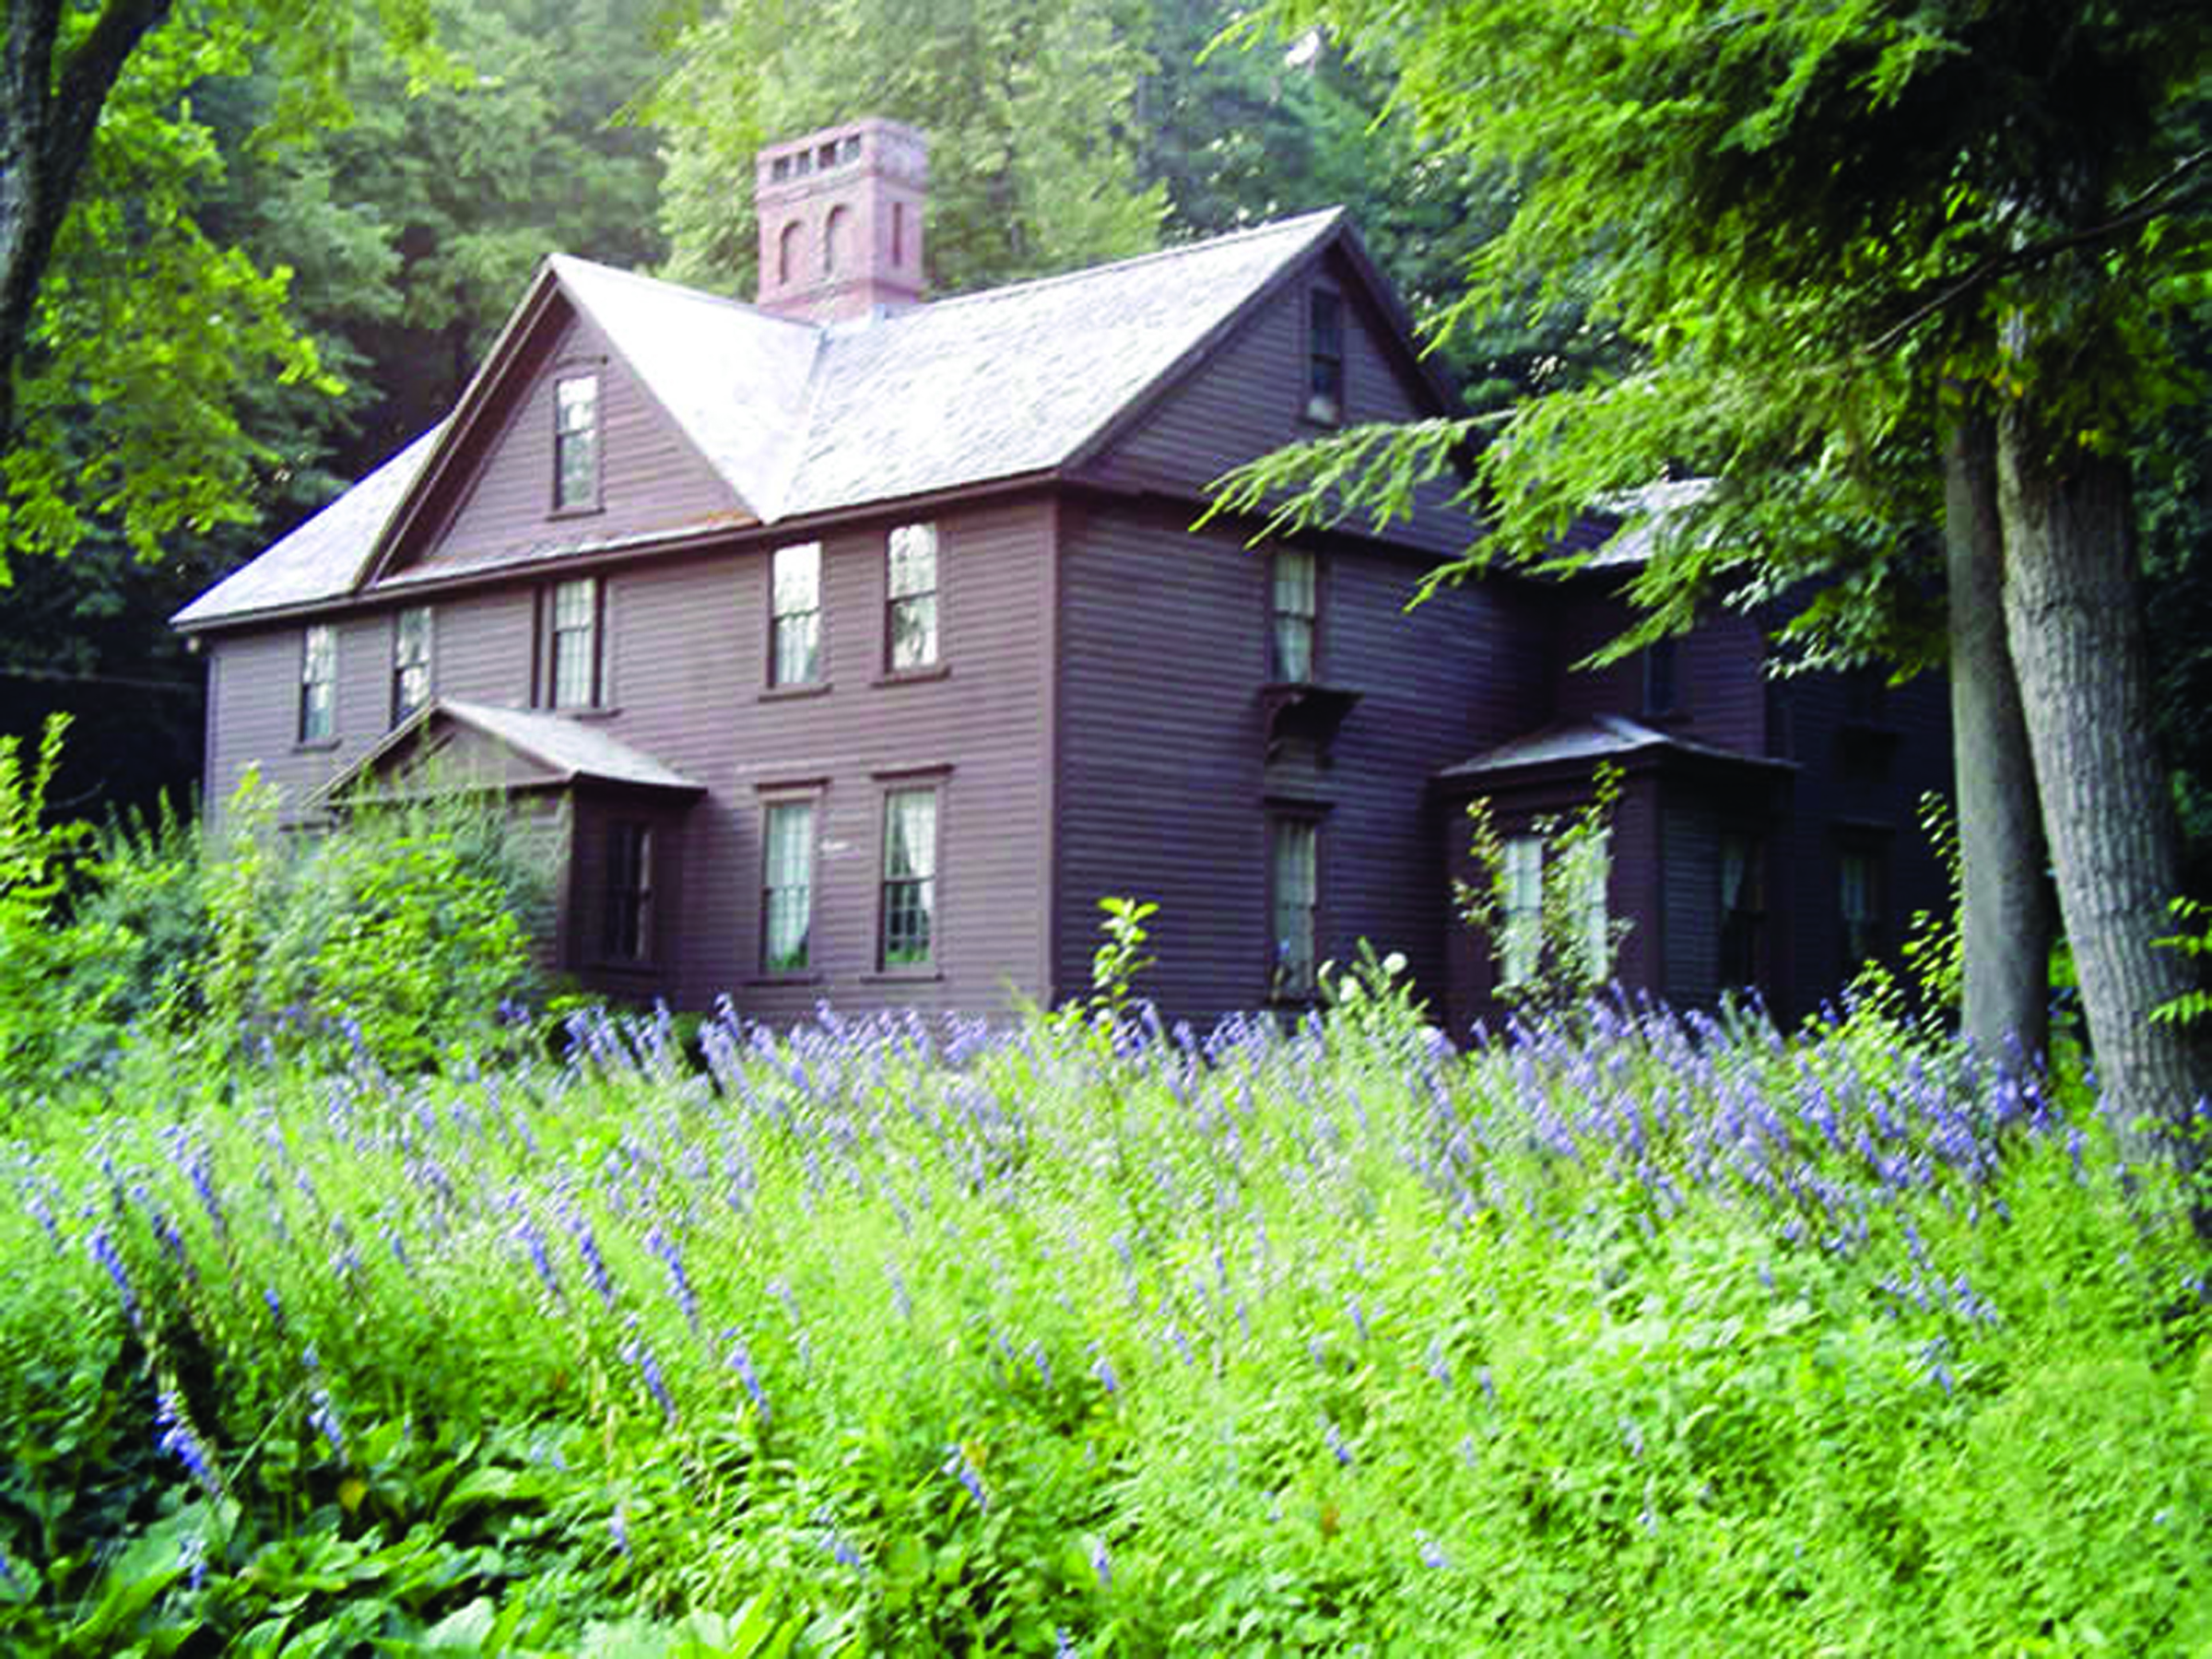 The Alcott Home in Concord, Massachussetts